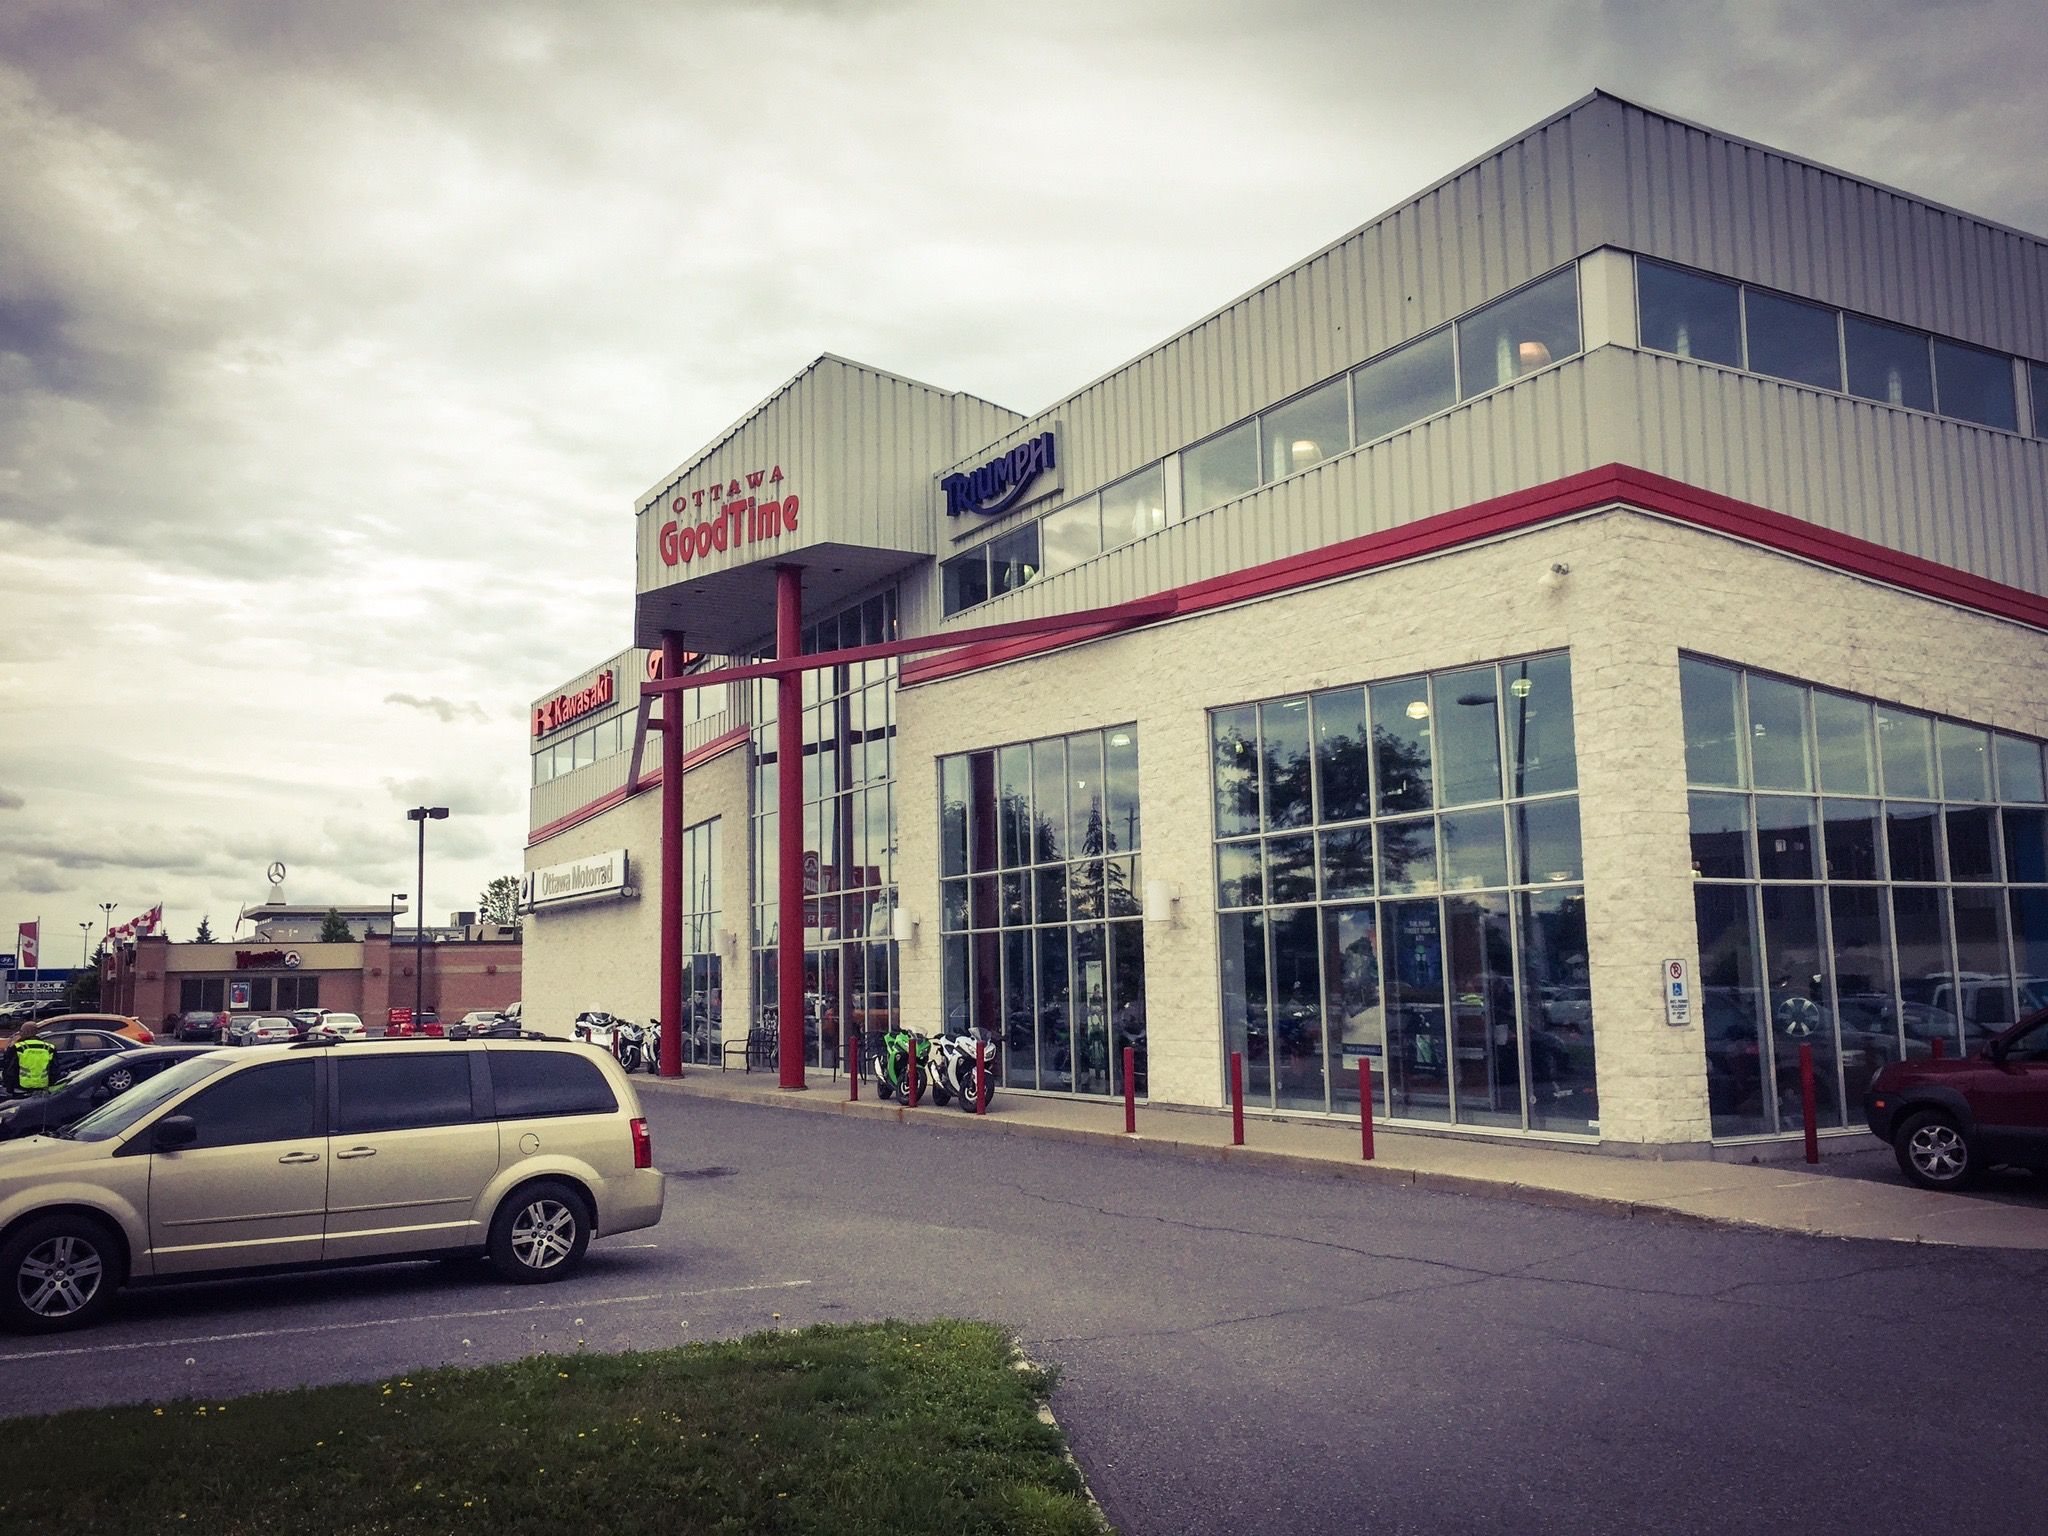 Ottawa GoodTime Centre: the local BMW Motorrad dealer and service centre.